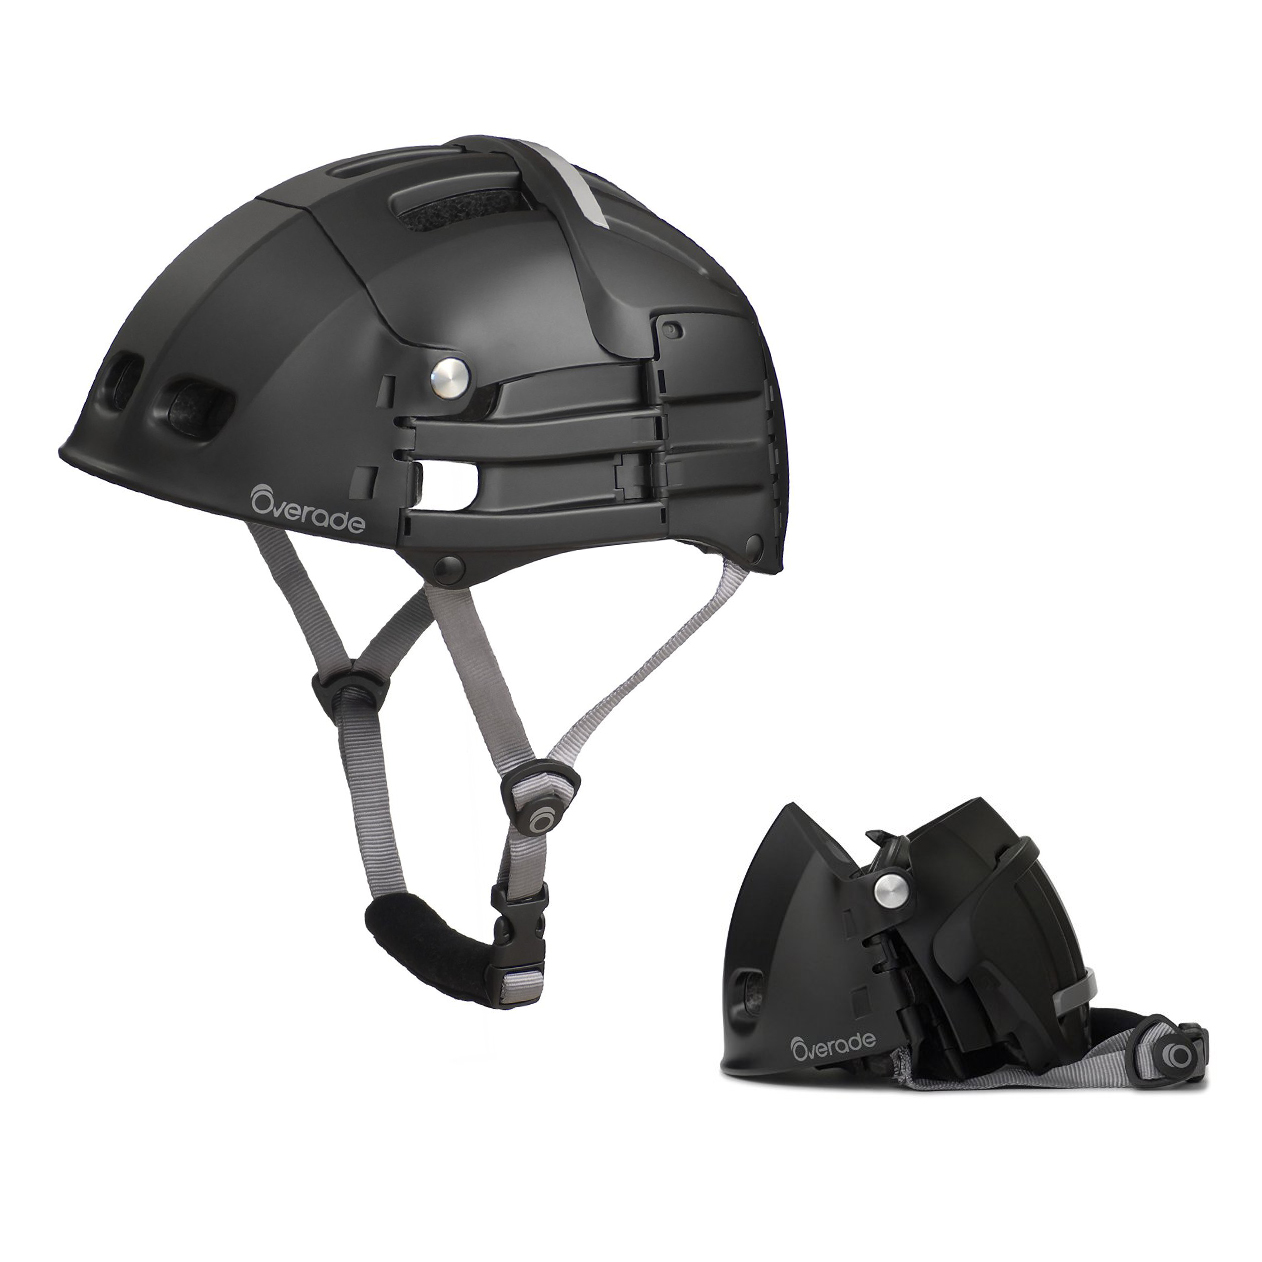 Overade foldable bicycle helmet helmet Plixi Foldable Bicycle Helmet